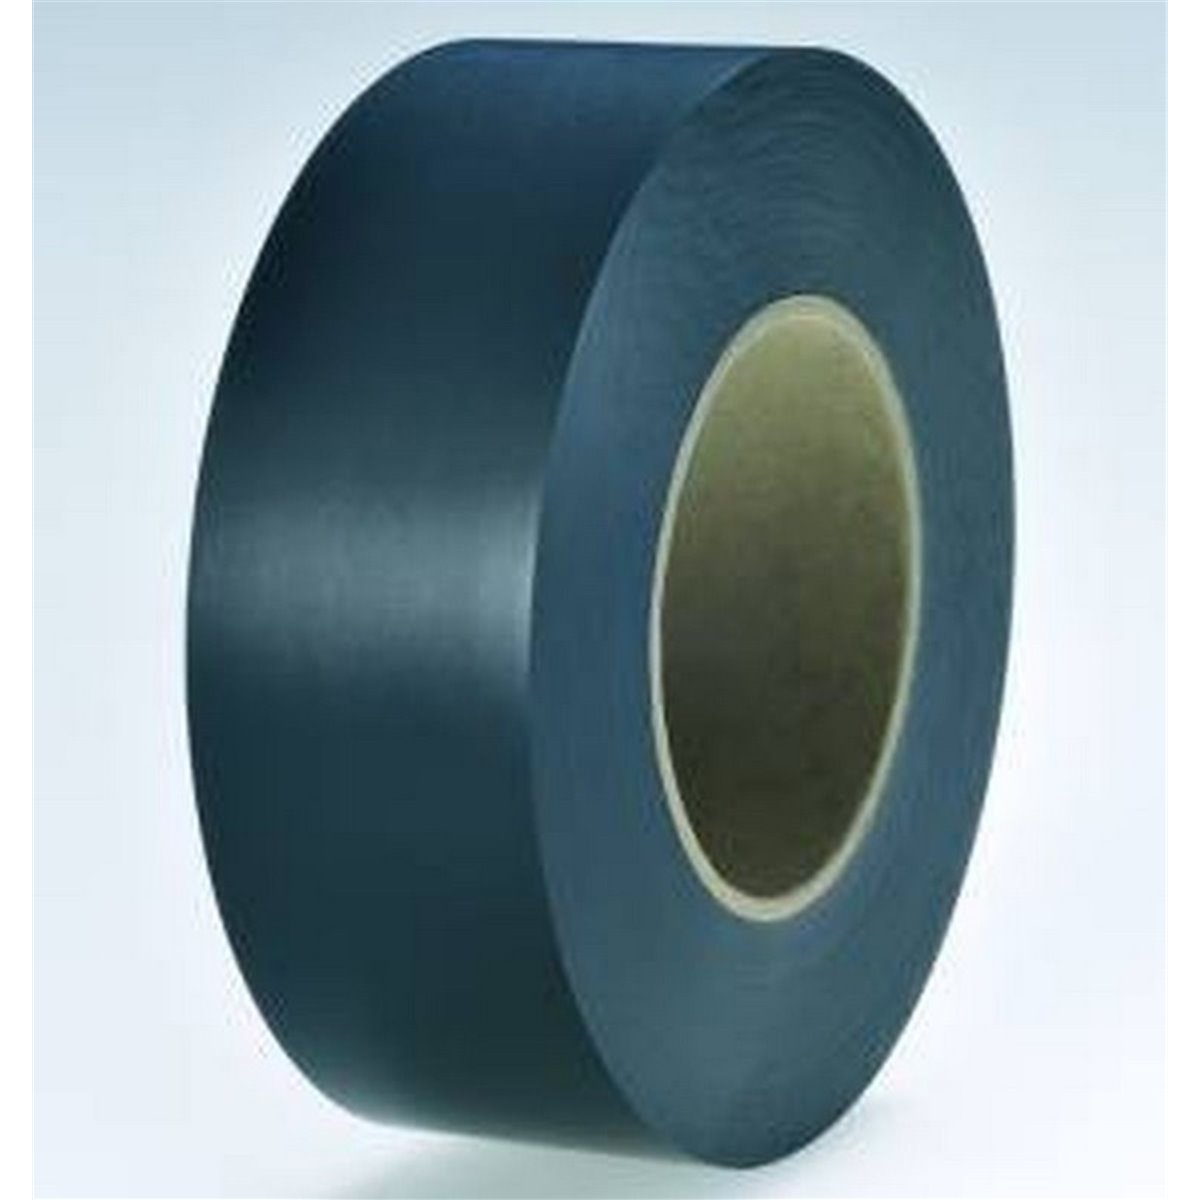 PVC Electrical insulation tape HelaTape Flex 40 HTAPE-FLEX40BK-50X30 HellermannTyton